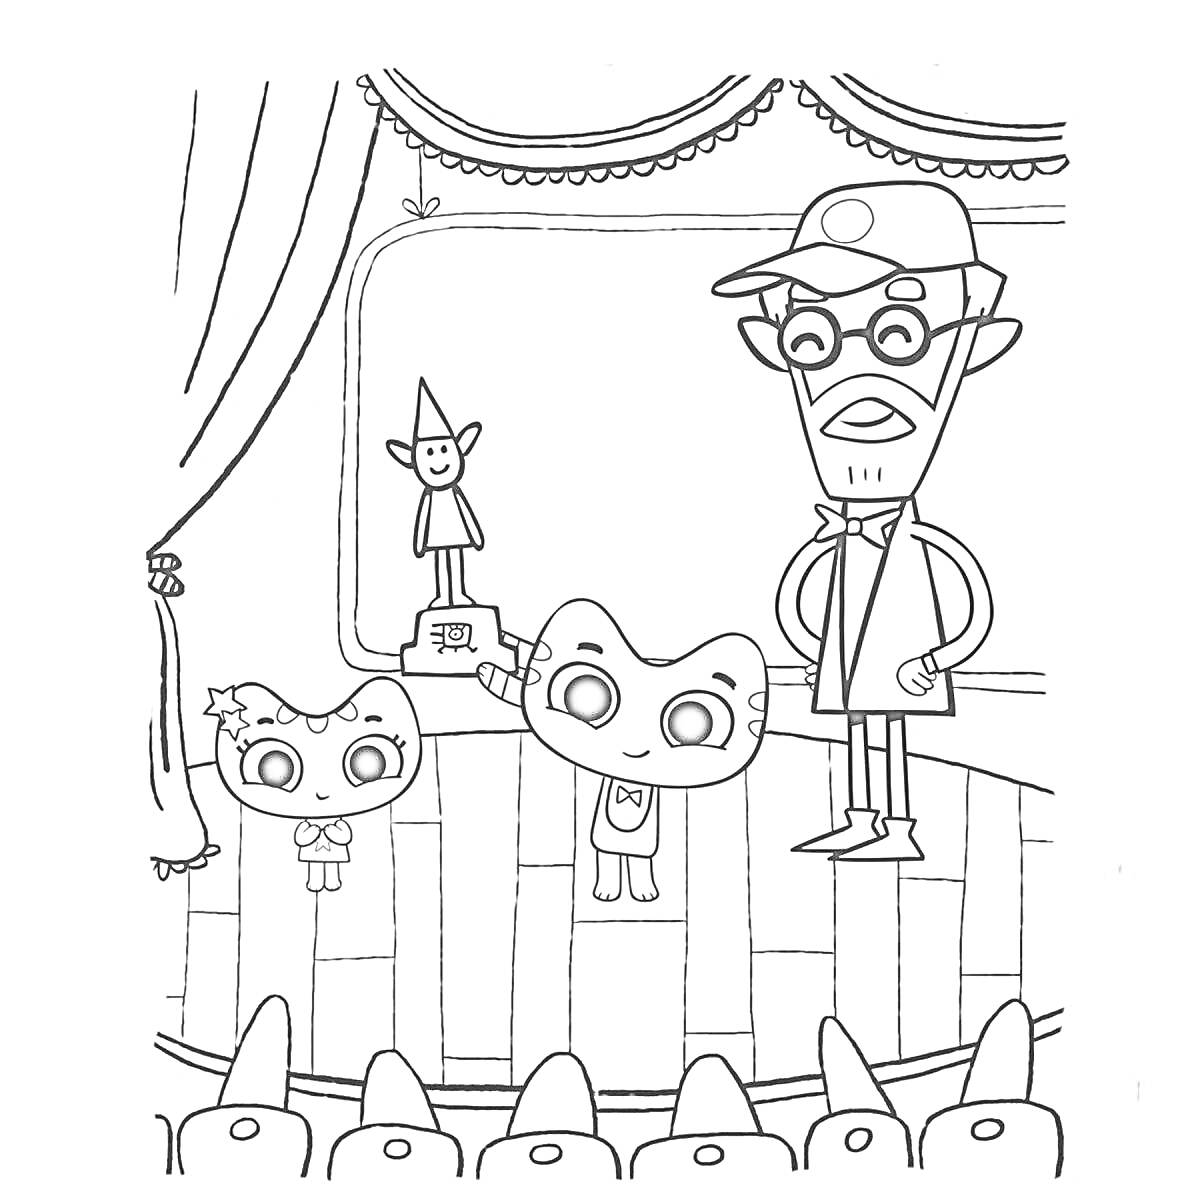 Раскраска Три котика с трофеем и взрослый на сцене с занавесом